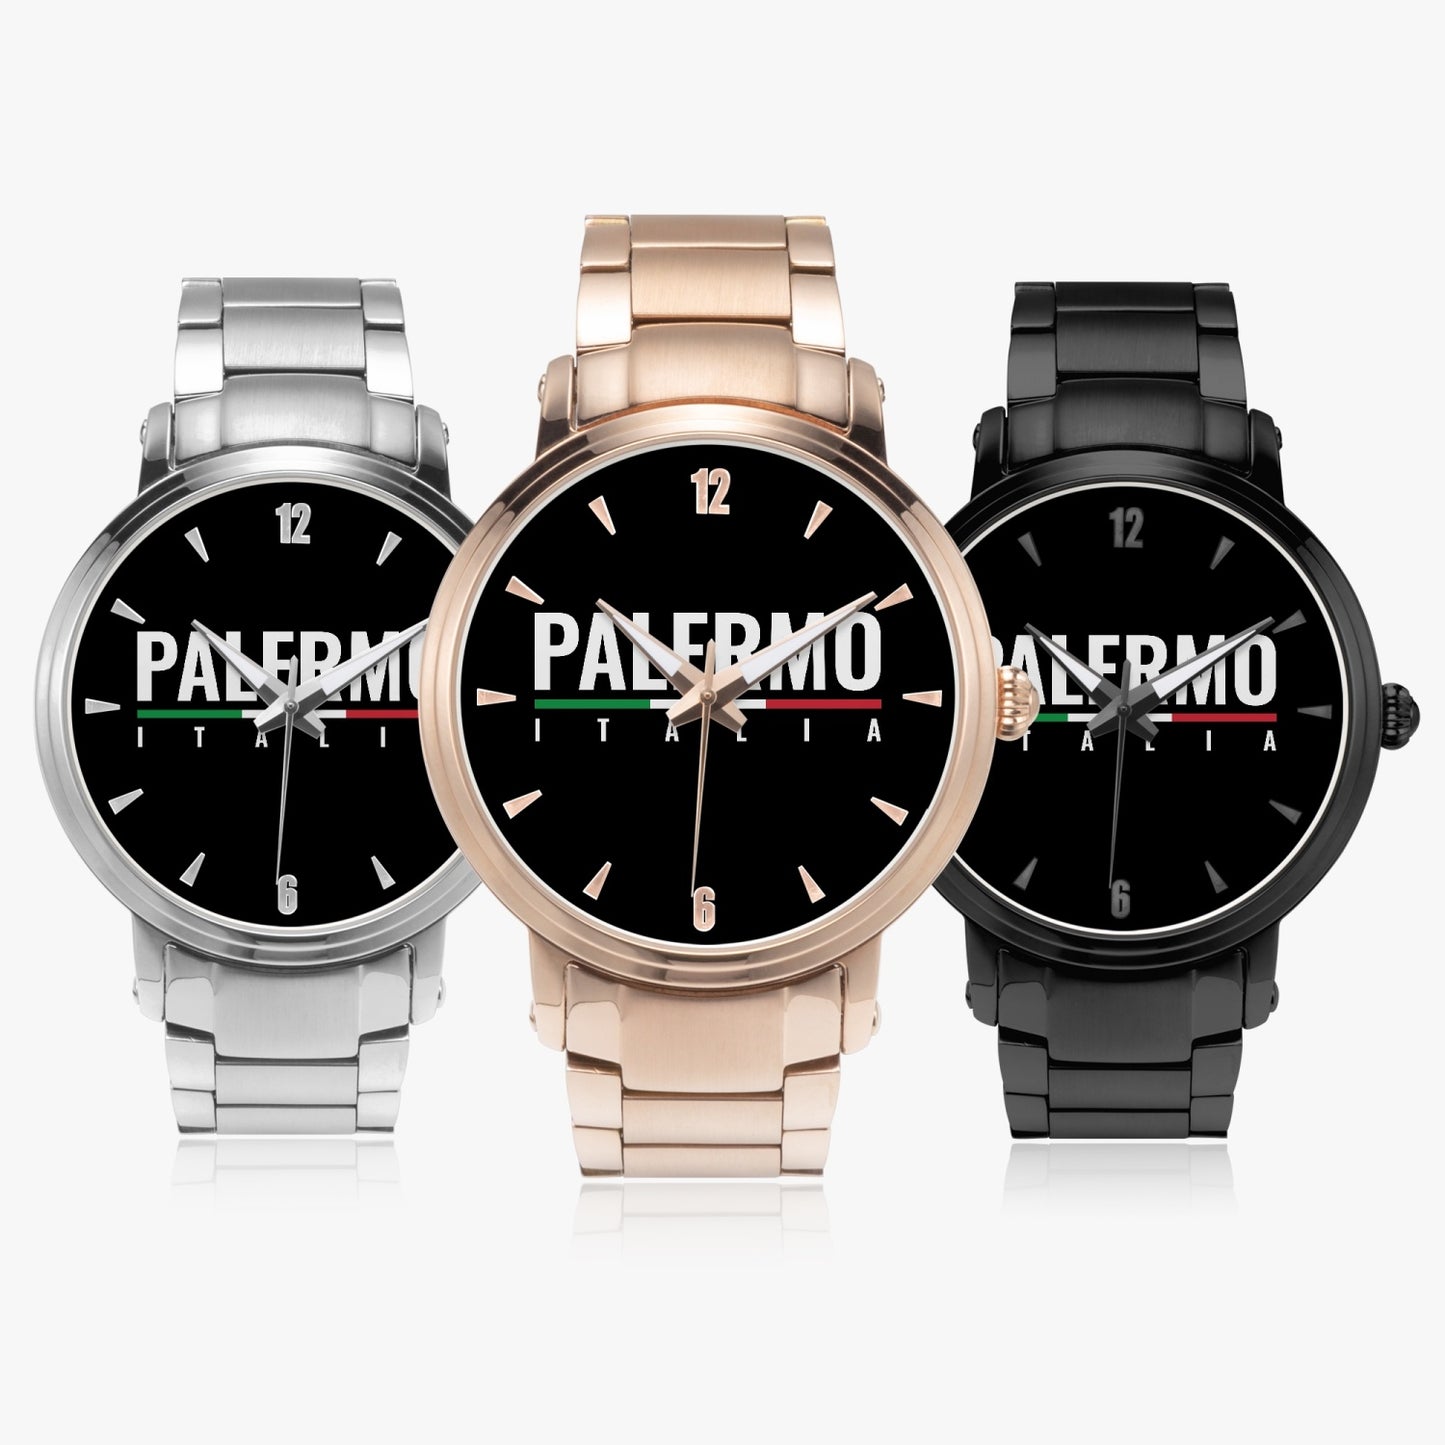 Palermo Italia Automatic Movement Watch - Premium Stainless Steel